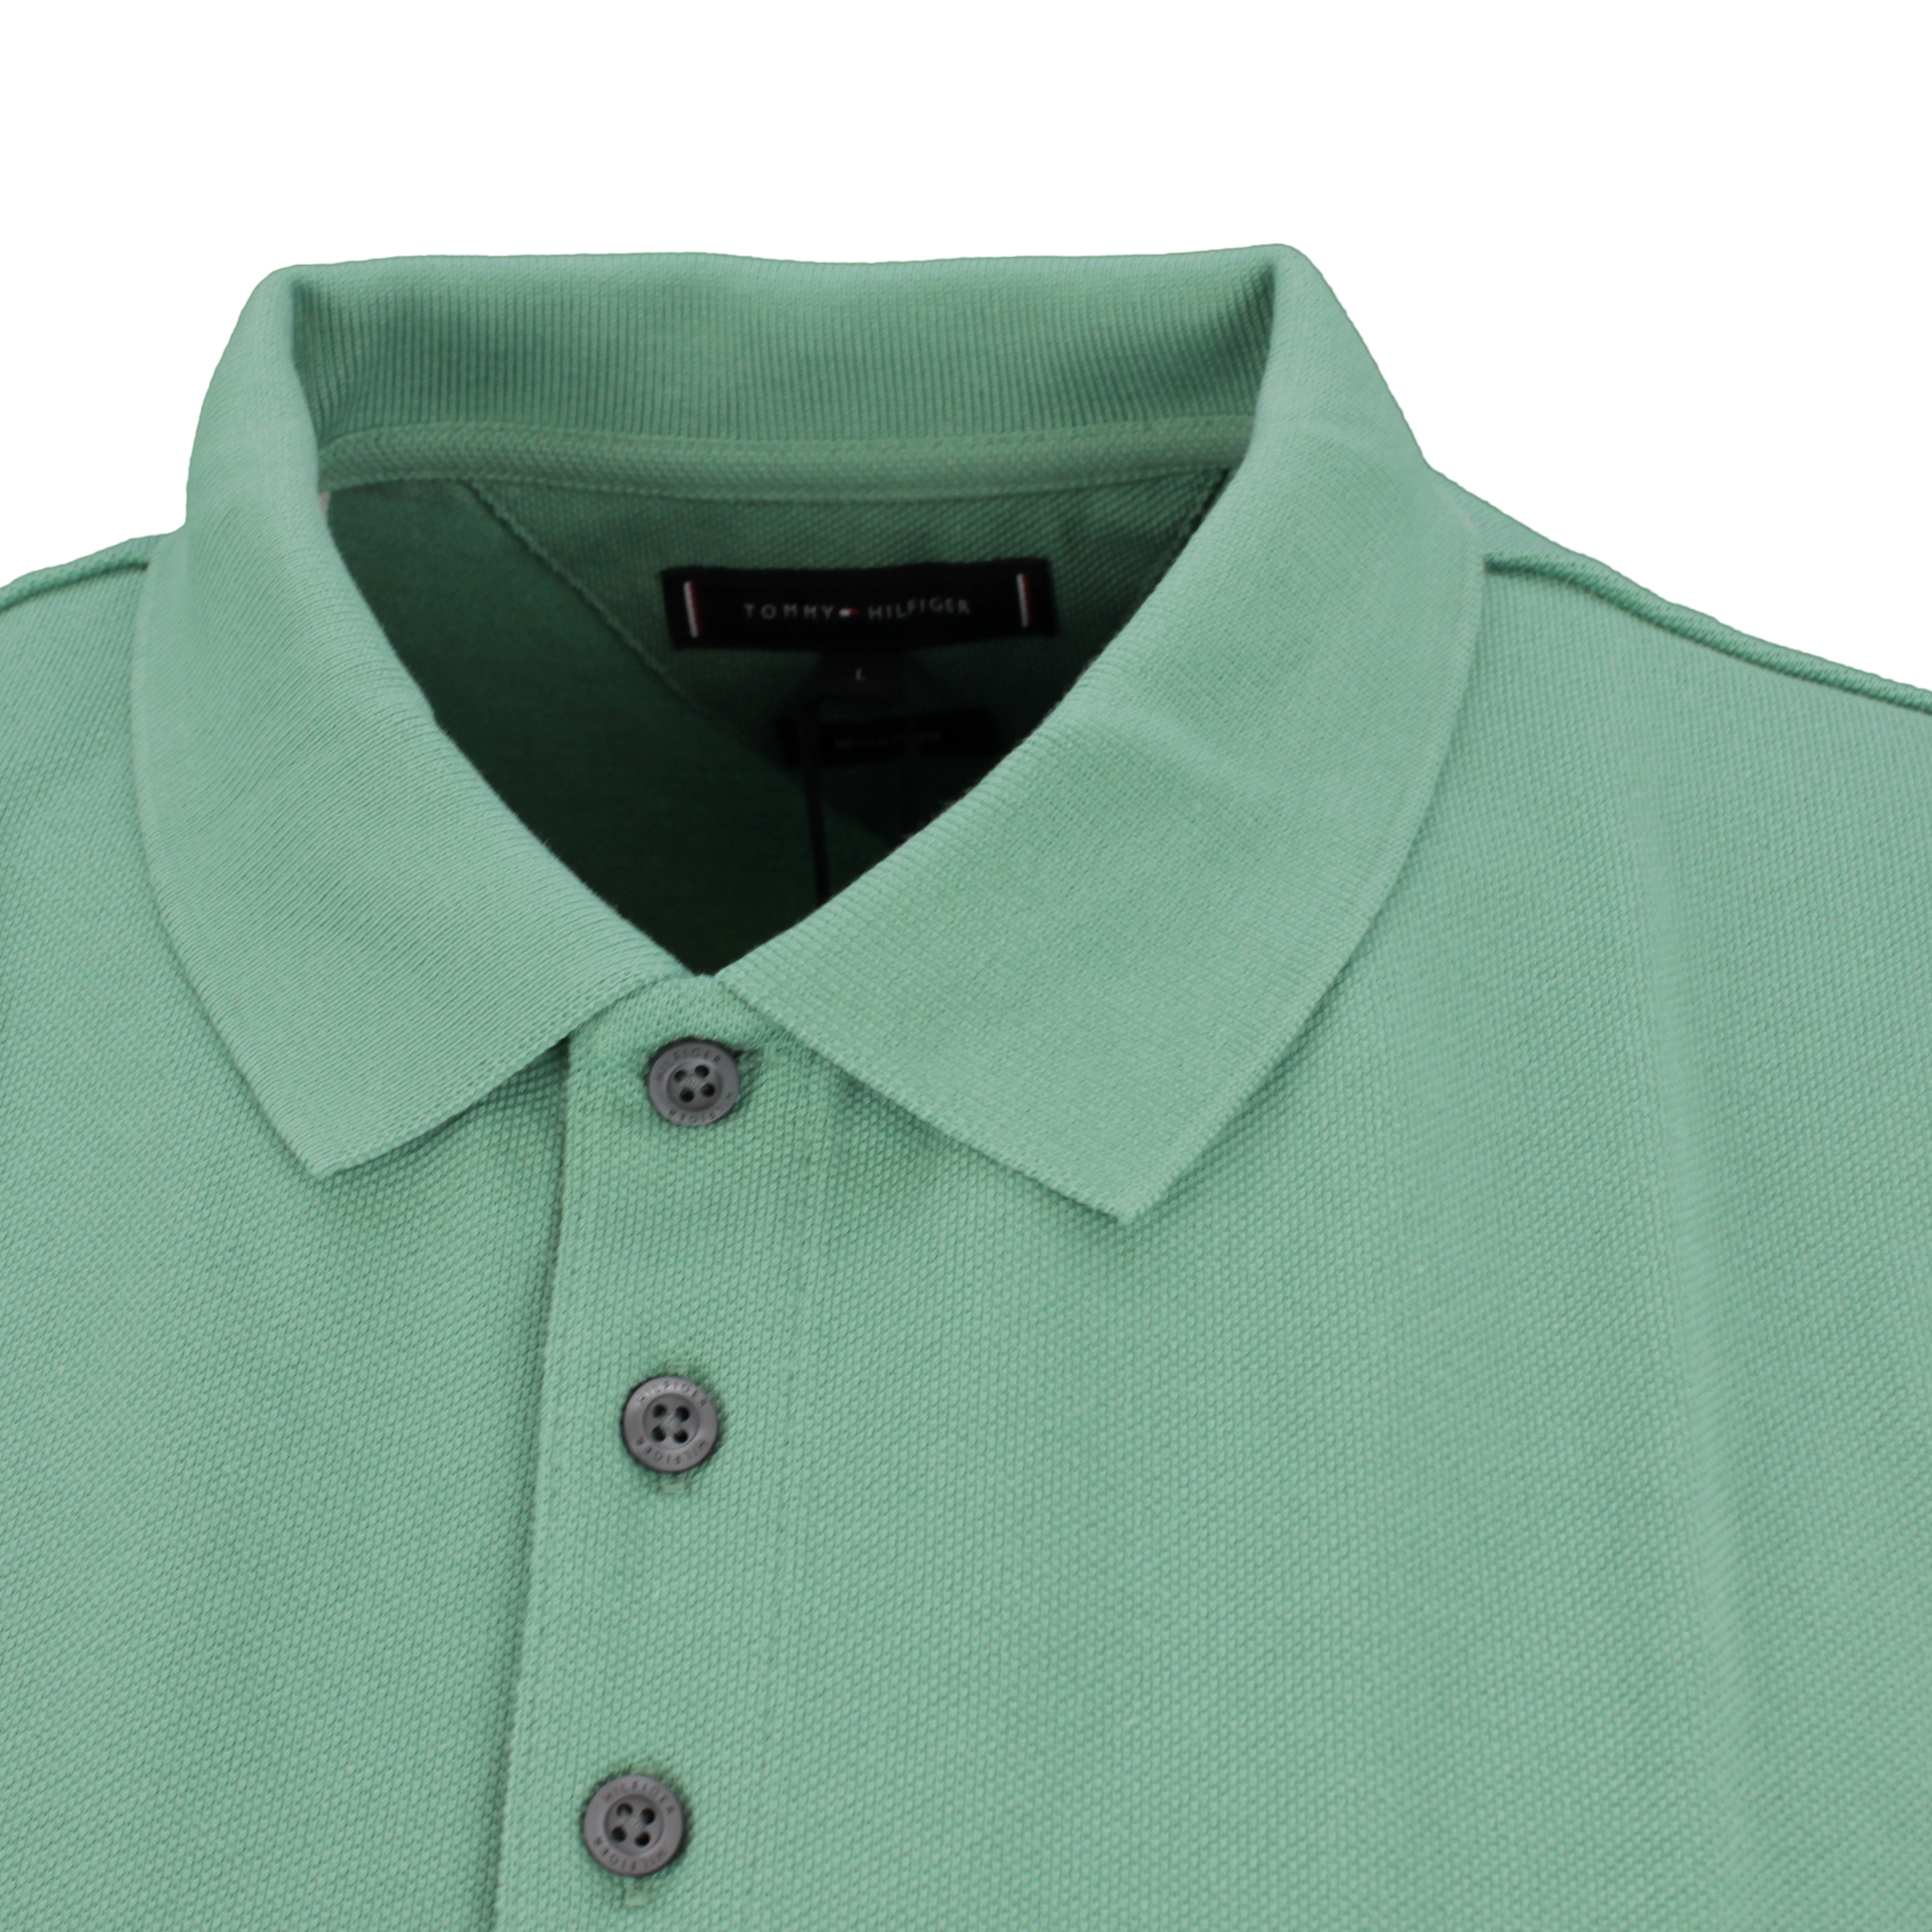 Tommy Hilfiger Polo Shirt Contrast Placket grün MW0MW19379 L3I green 